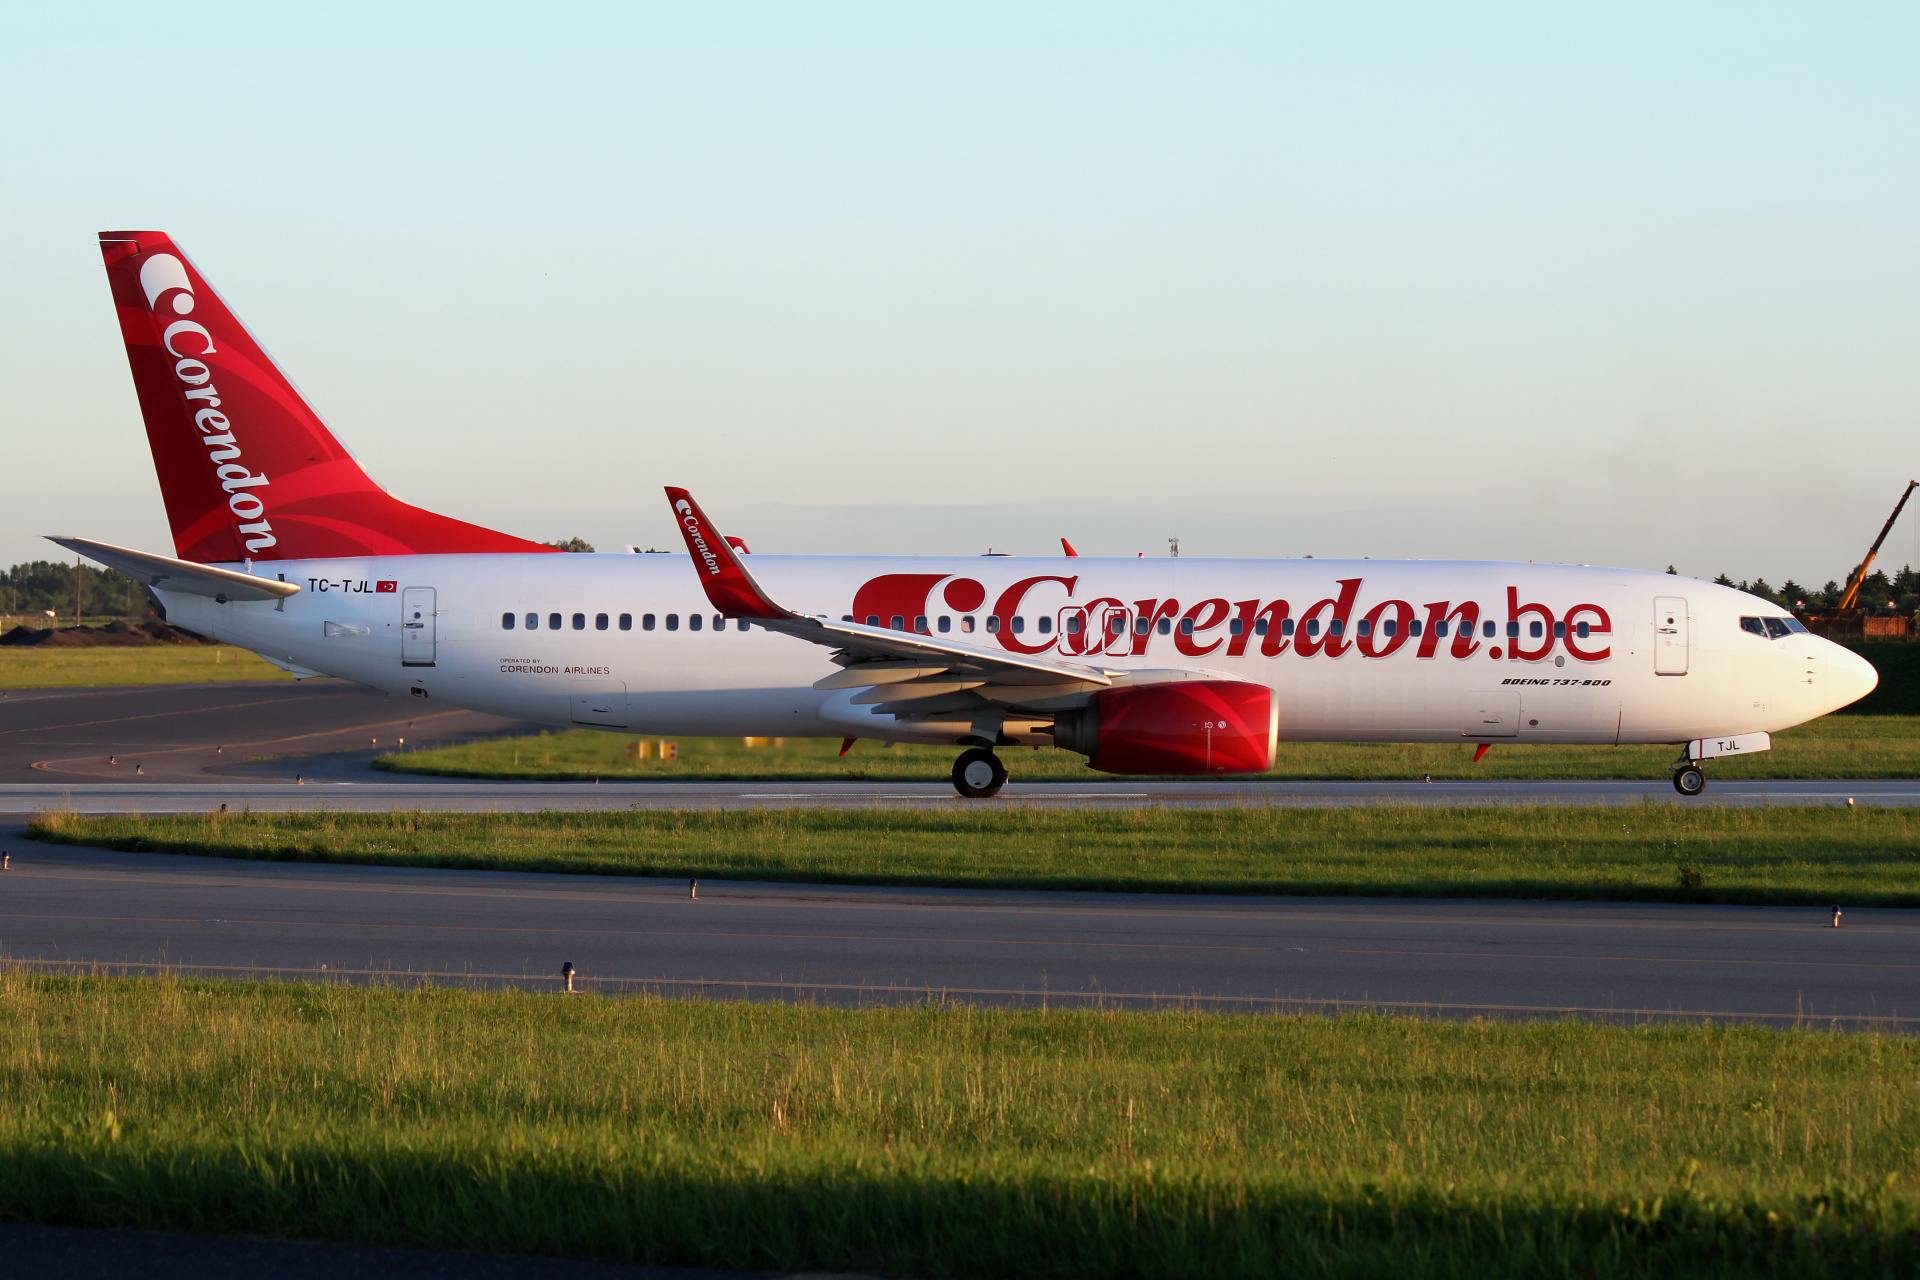 TC-TJL, Corendon Airlines Belgium (Aircraft » EPWA Spotting » Boeing 737-800 » Corendon Airlines)